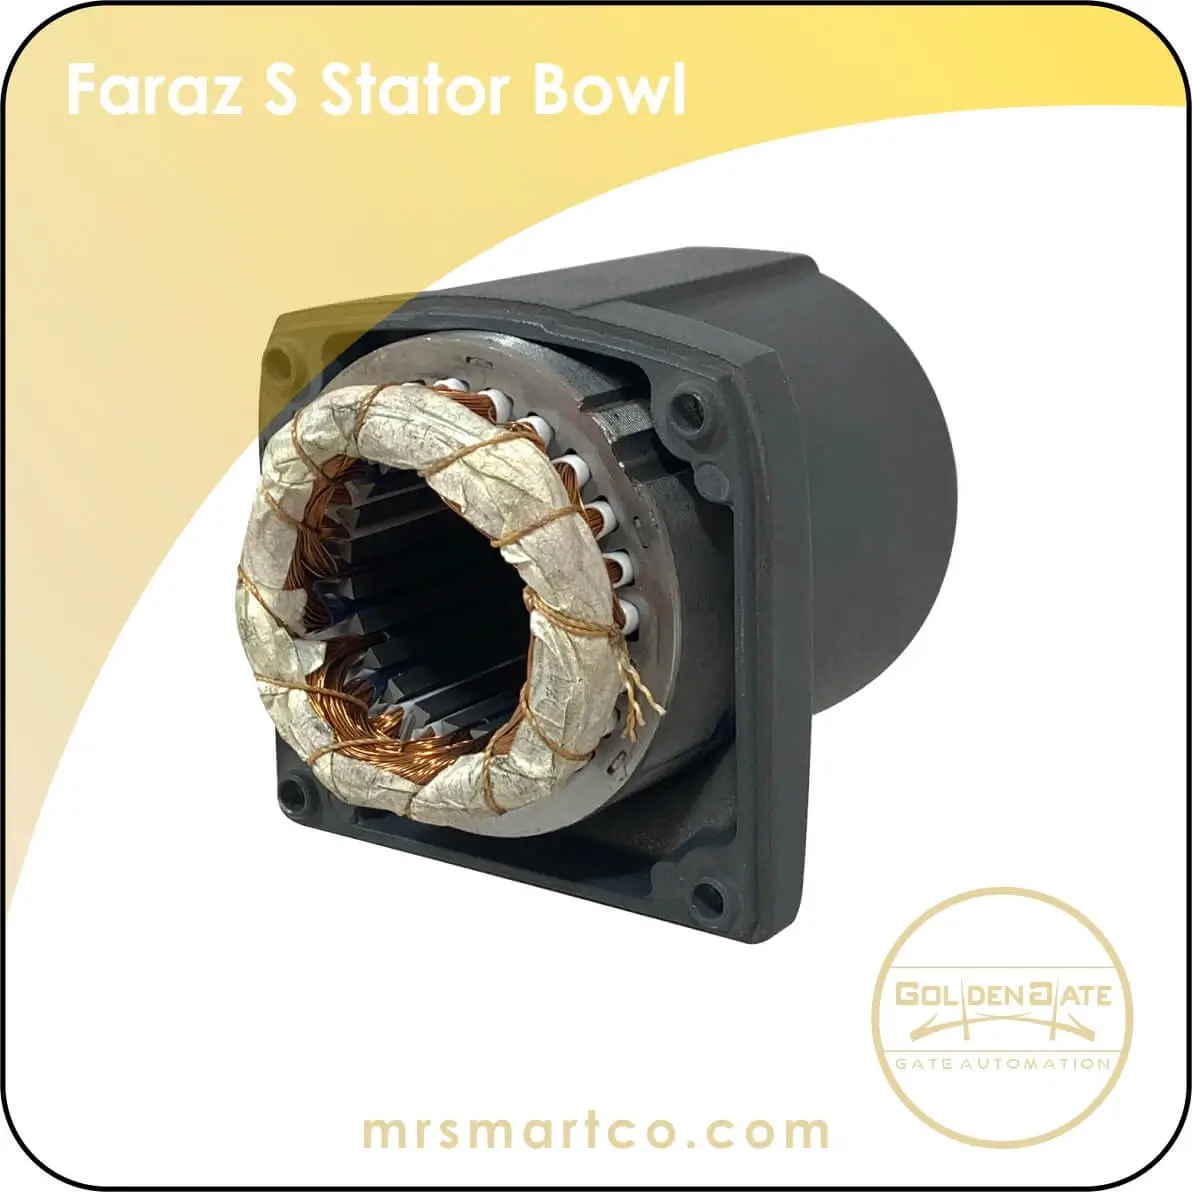 Faraz S stator bowl